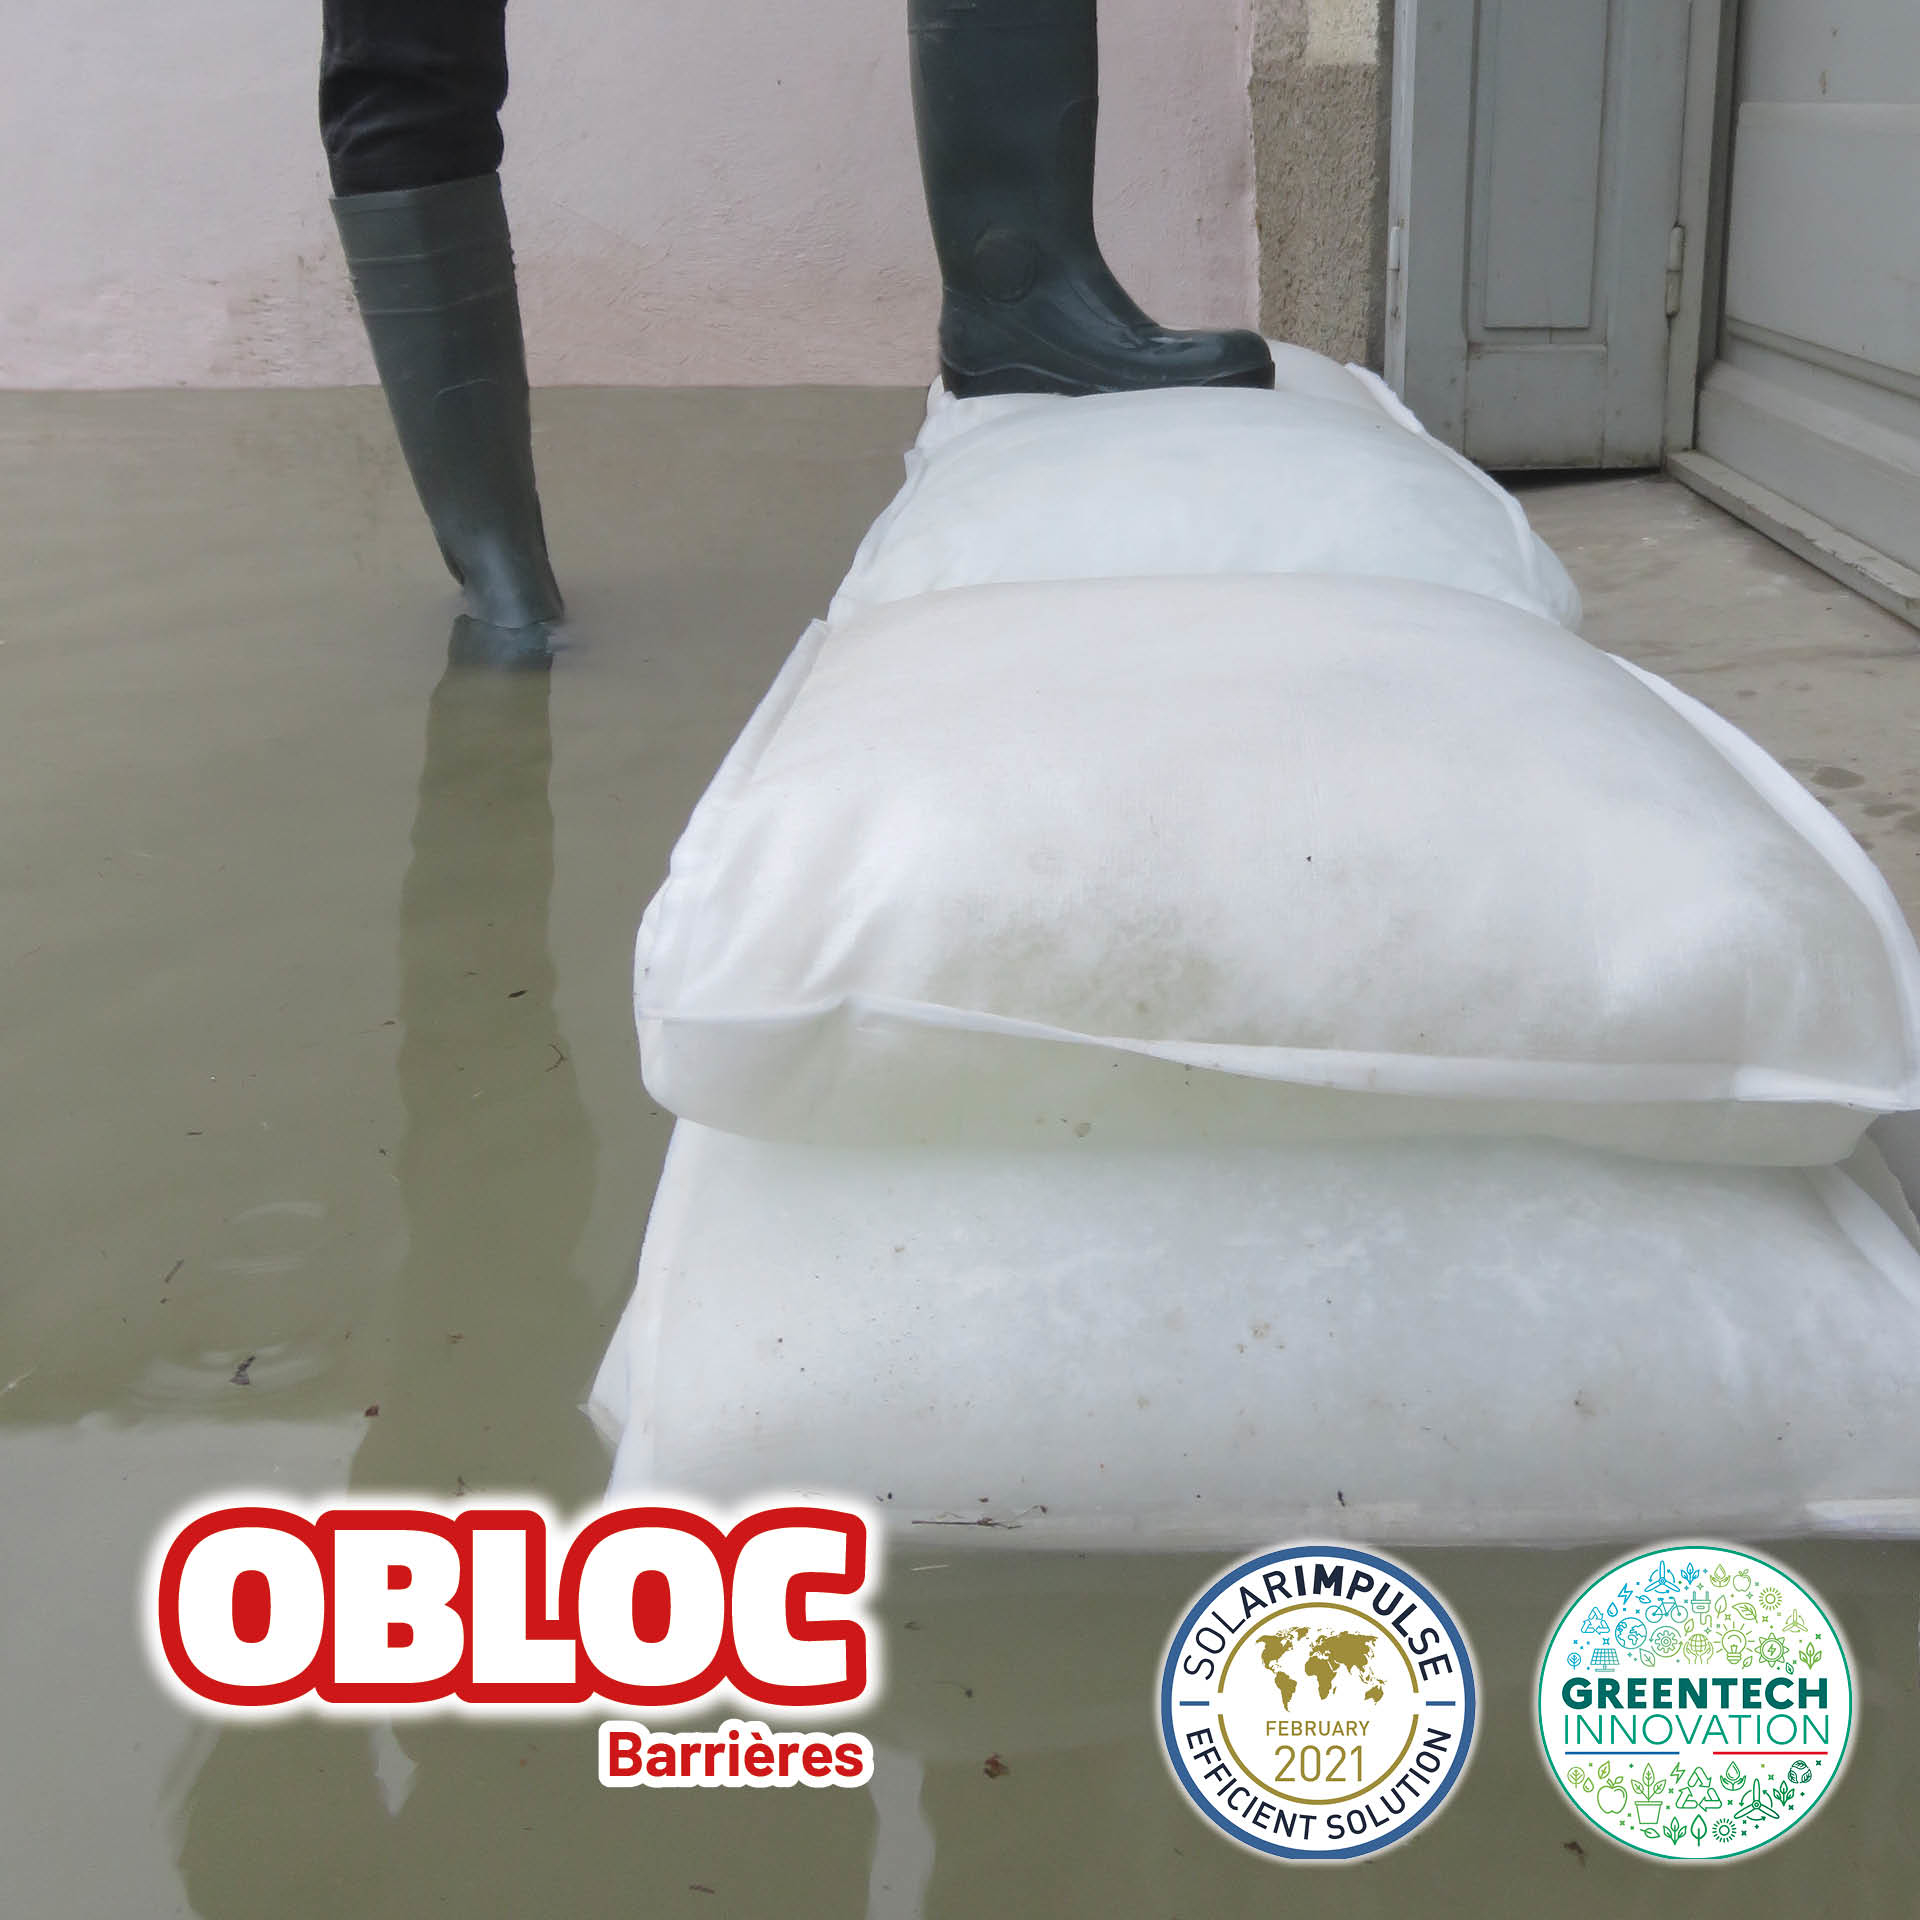 Visuel de 4 sacs anti-inondation OBLOC® Barrières anti-inondation